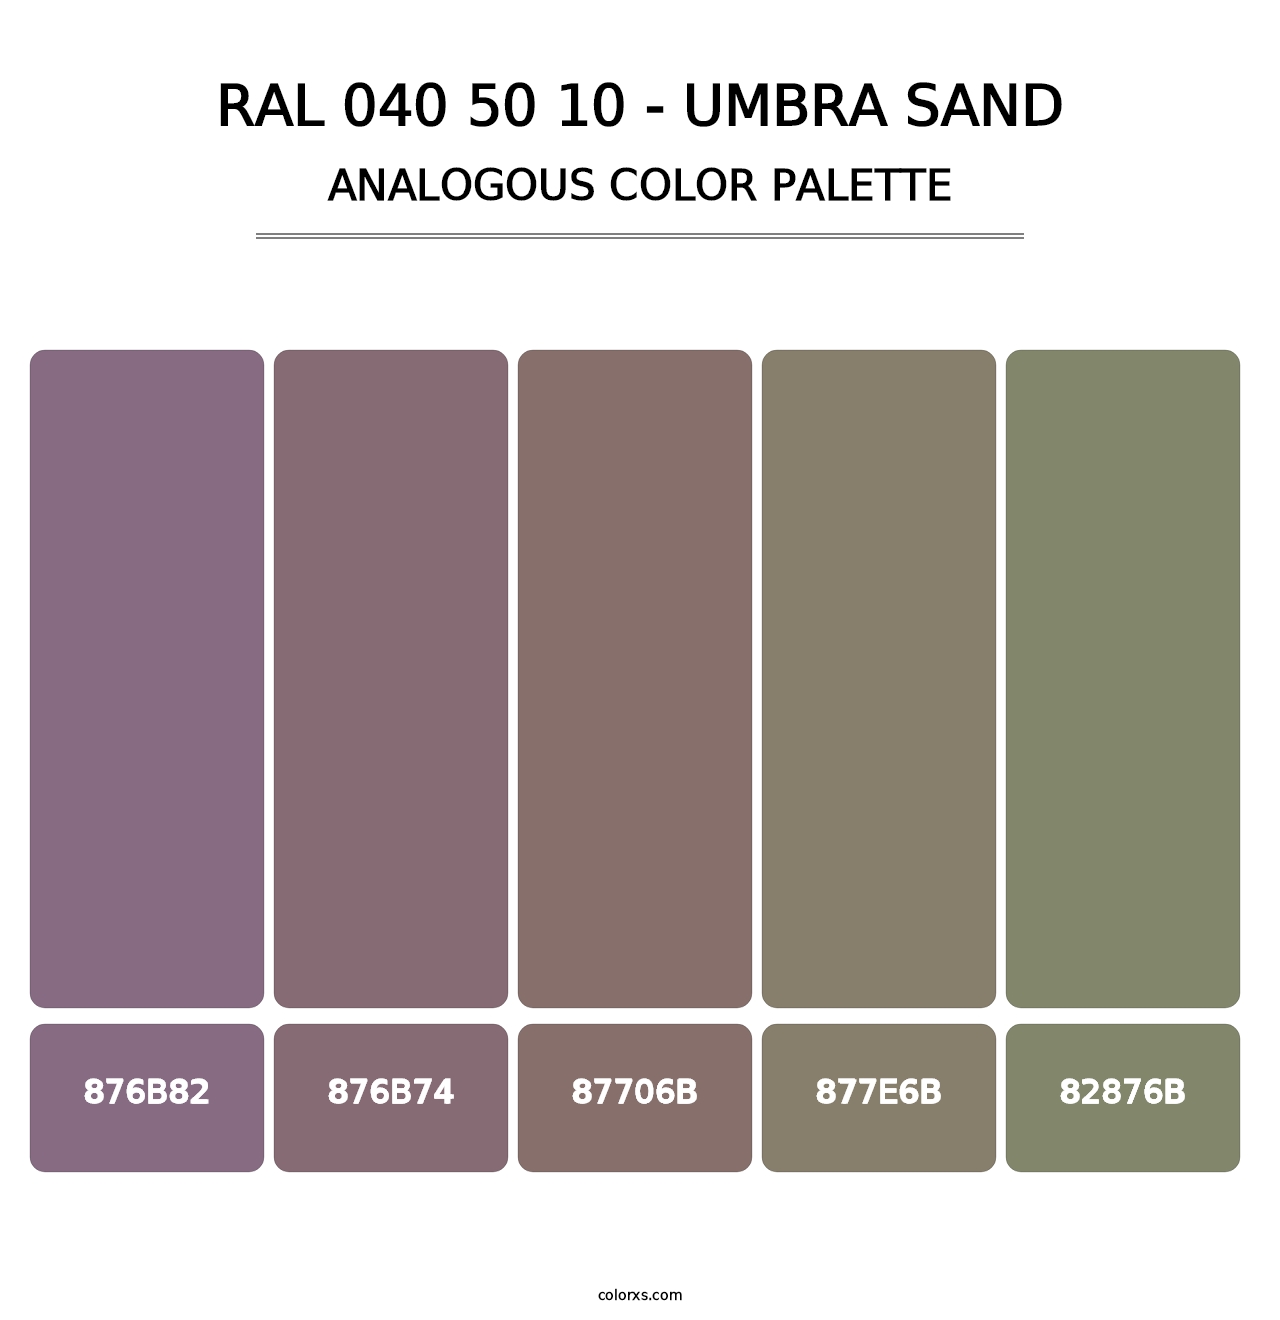 RAL 040 50 10 - Umbra Sand - Analogous Color Palette